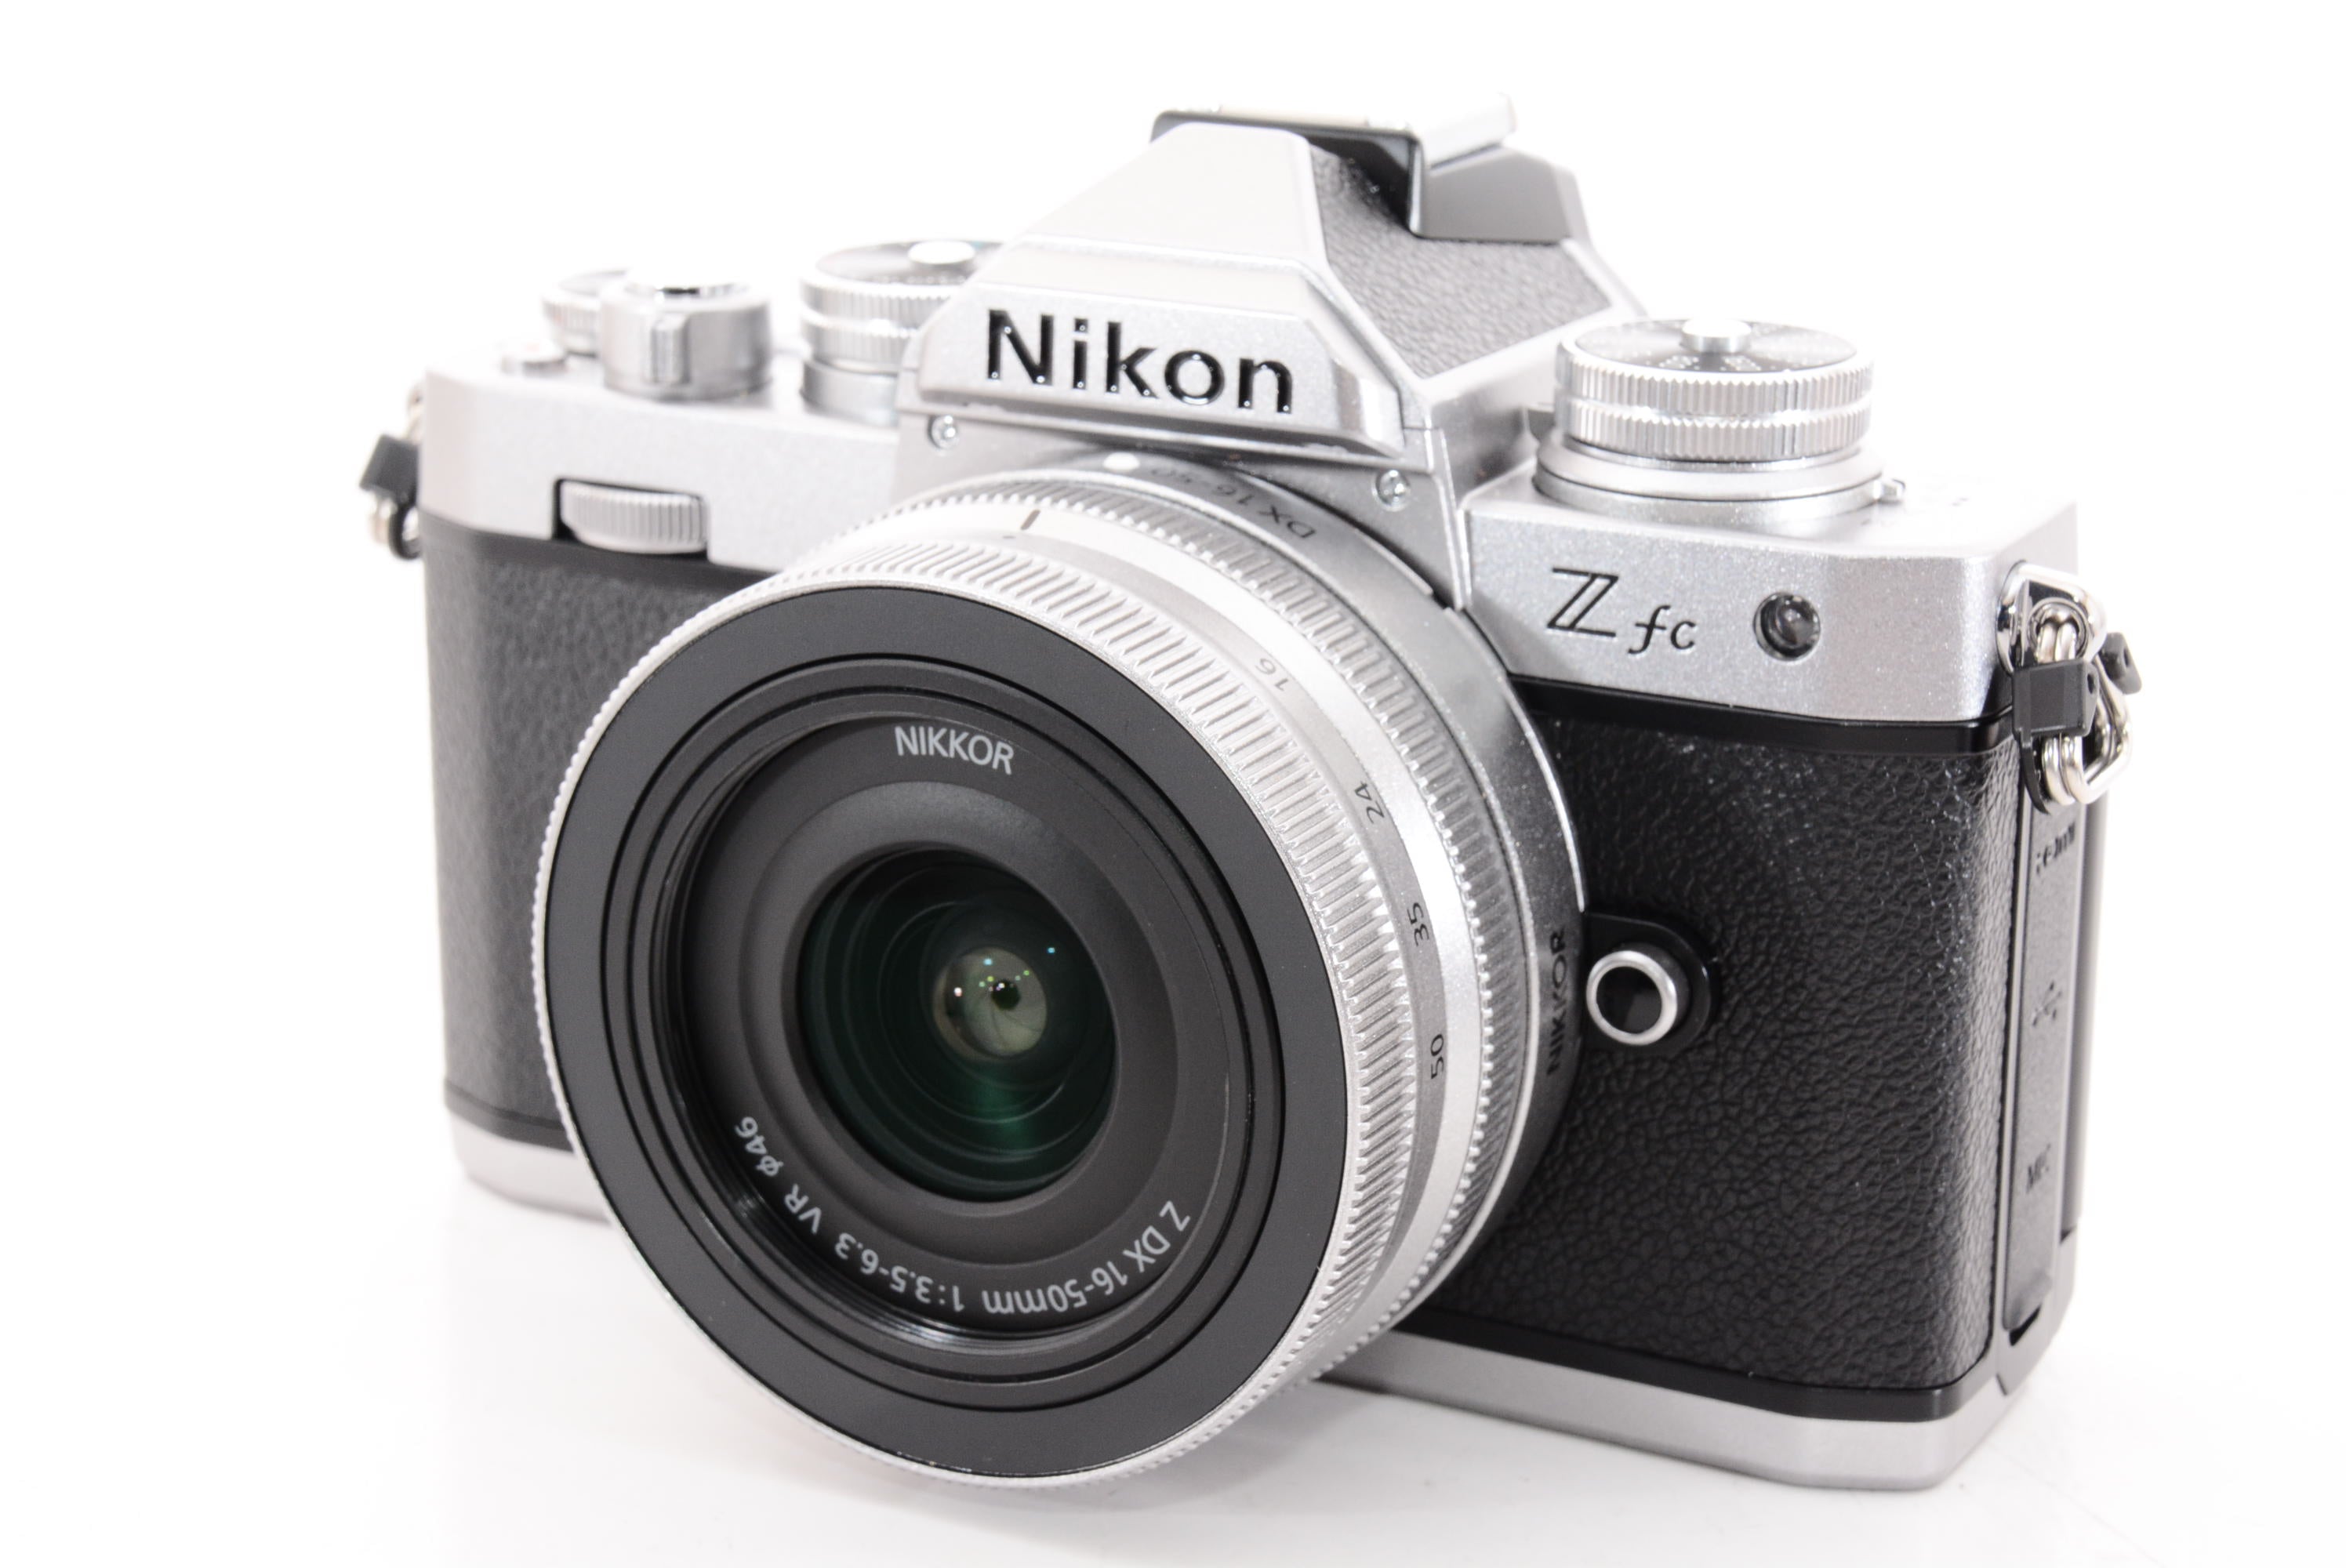 Nikon Nikkor Z DX 16-50mm 1:3.5-6.3 VR - レンズ(ズーム)